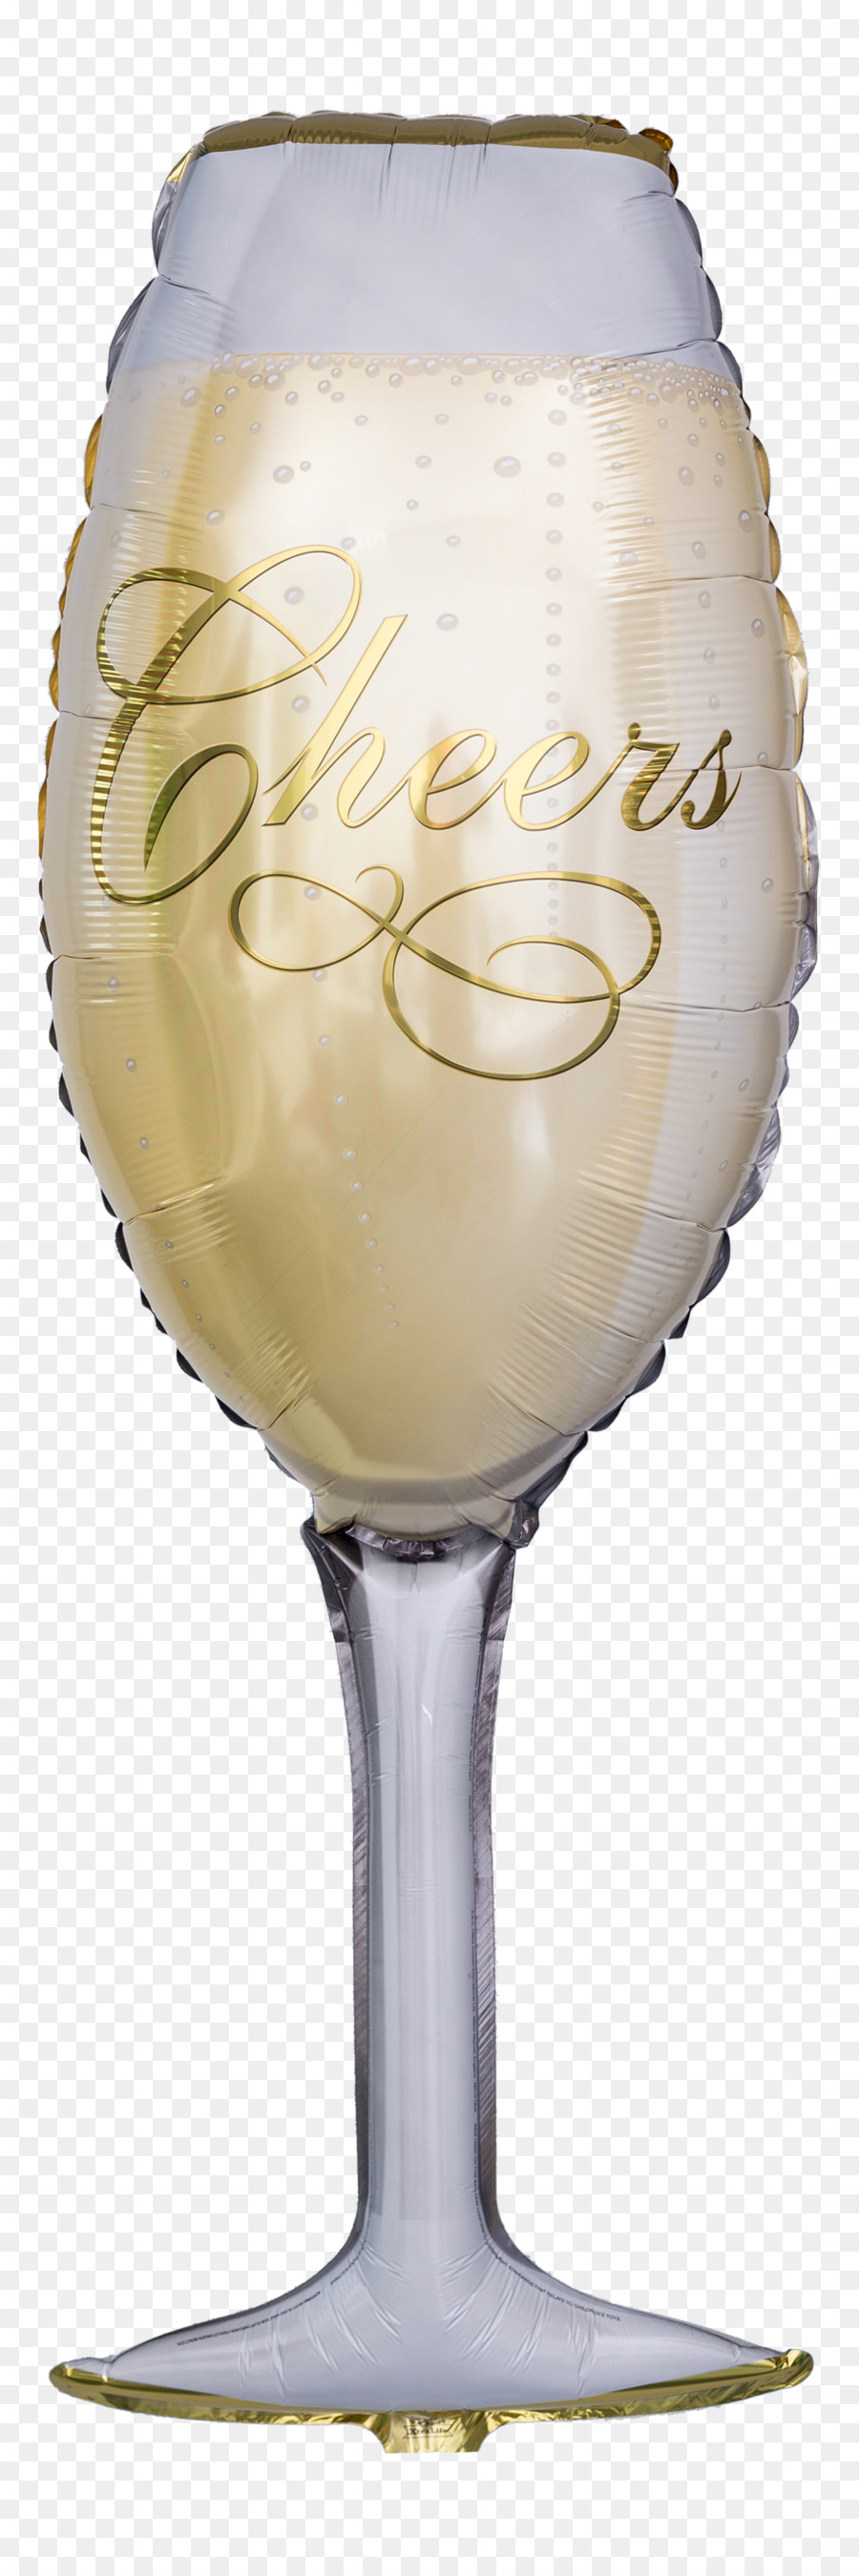 Wein-Glas-Spielzeug-Ballon Champagner Glas Ballon mail - Ballon